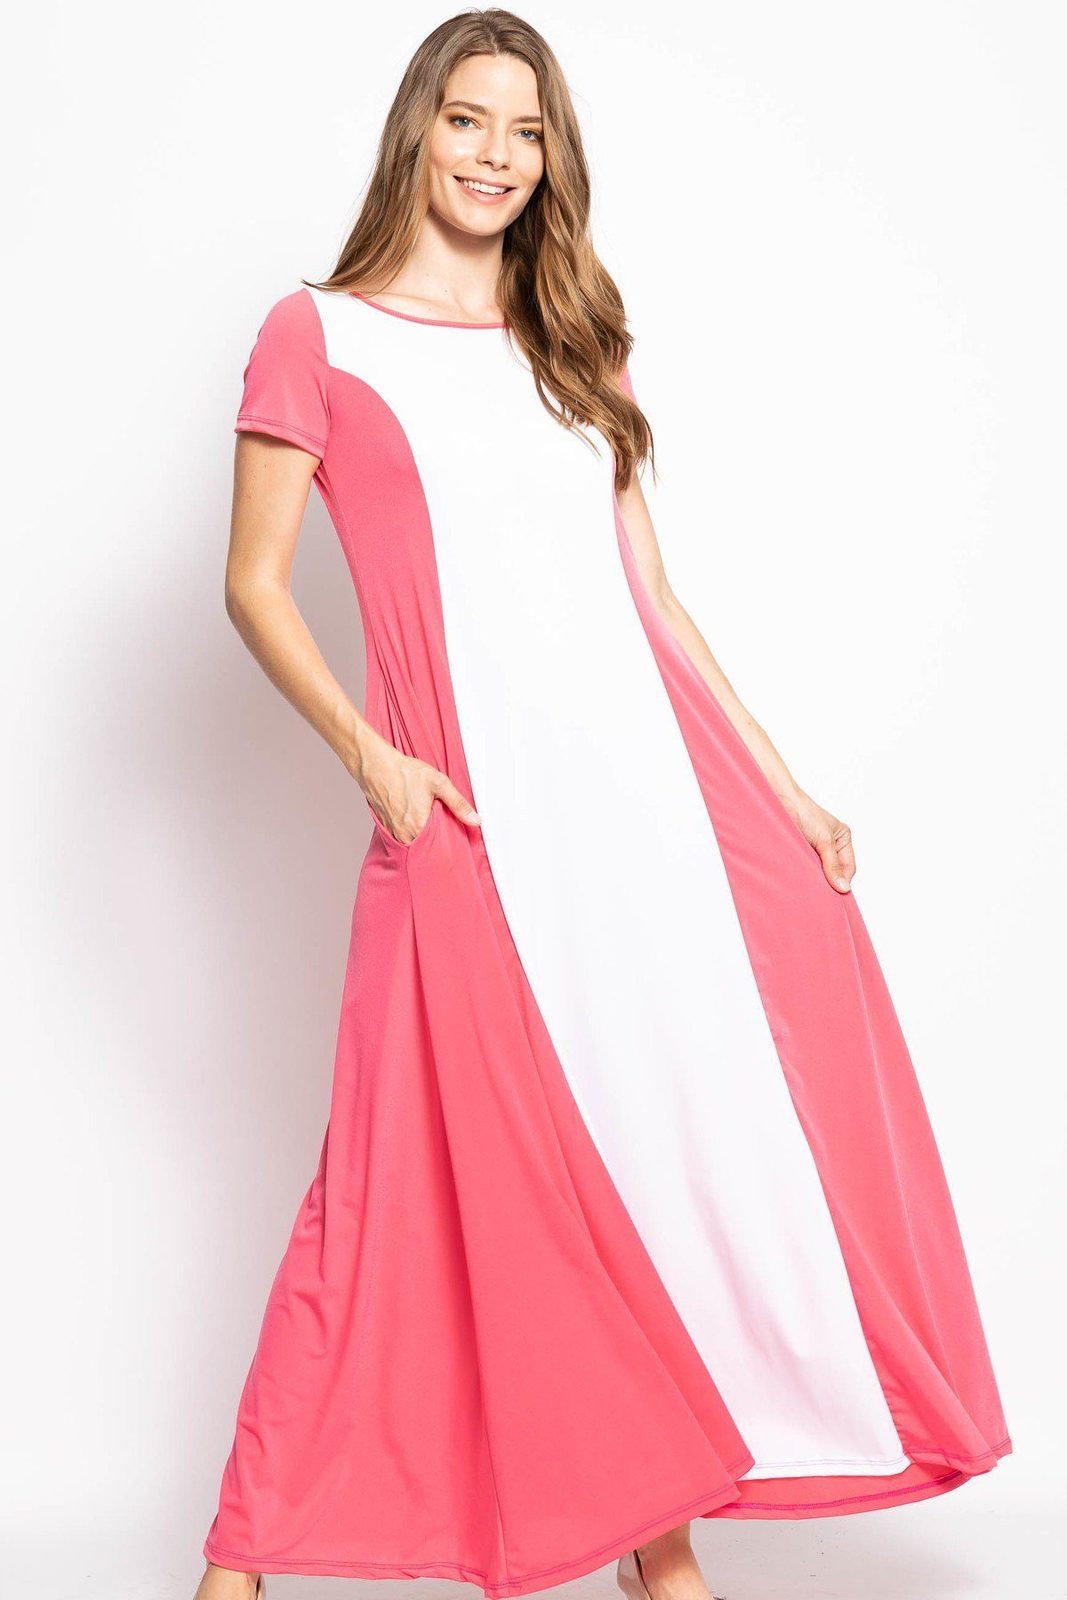 Colorful Breezy Summer Maxi Dress - Dresses